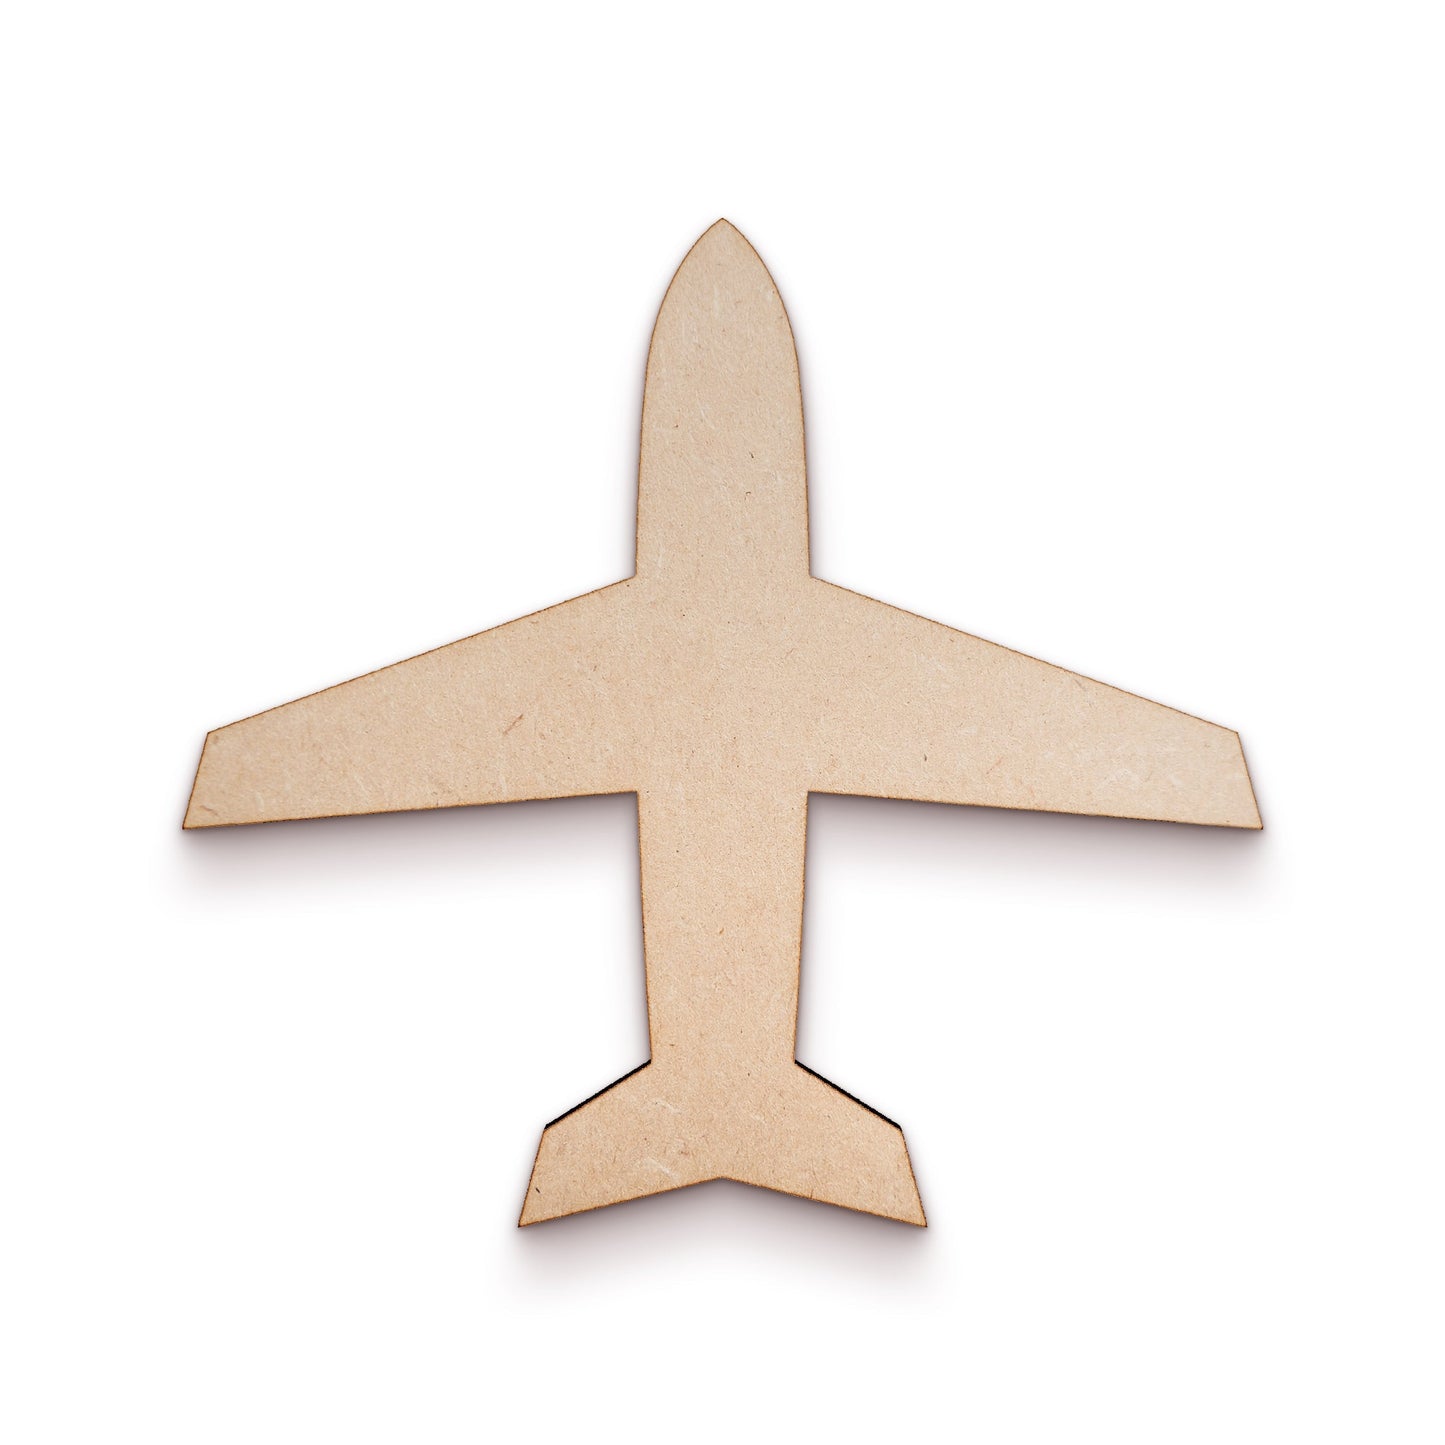 Plane wood craft shape SKU646213